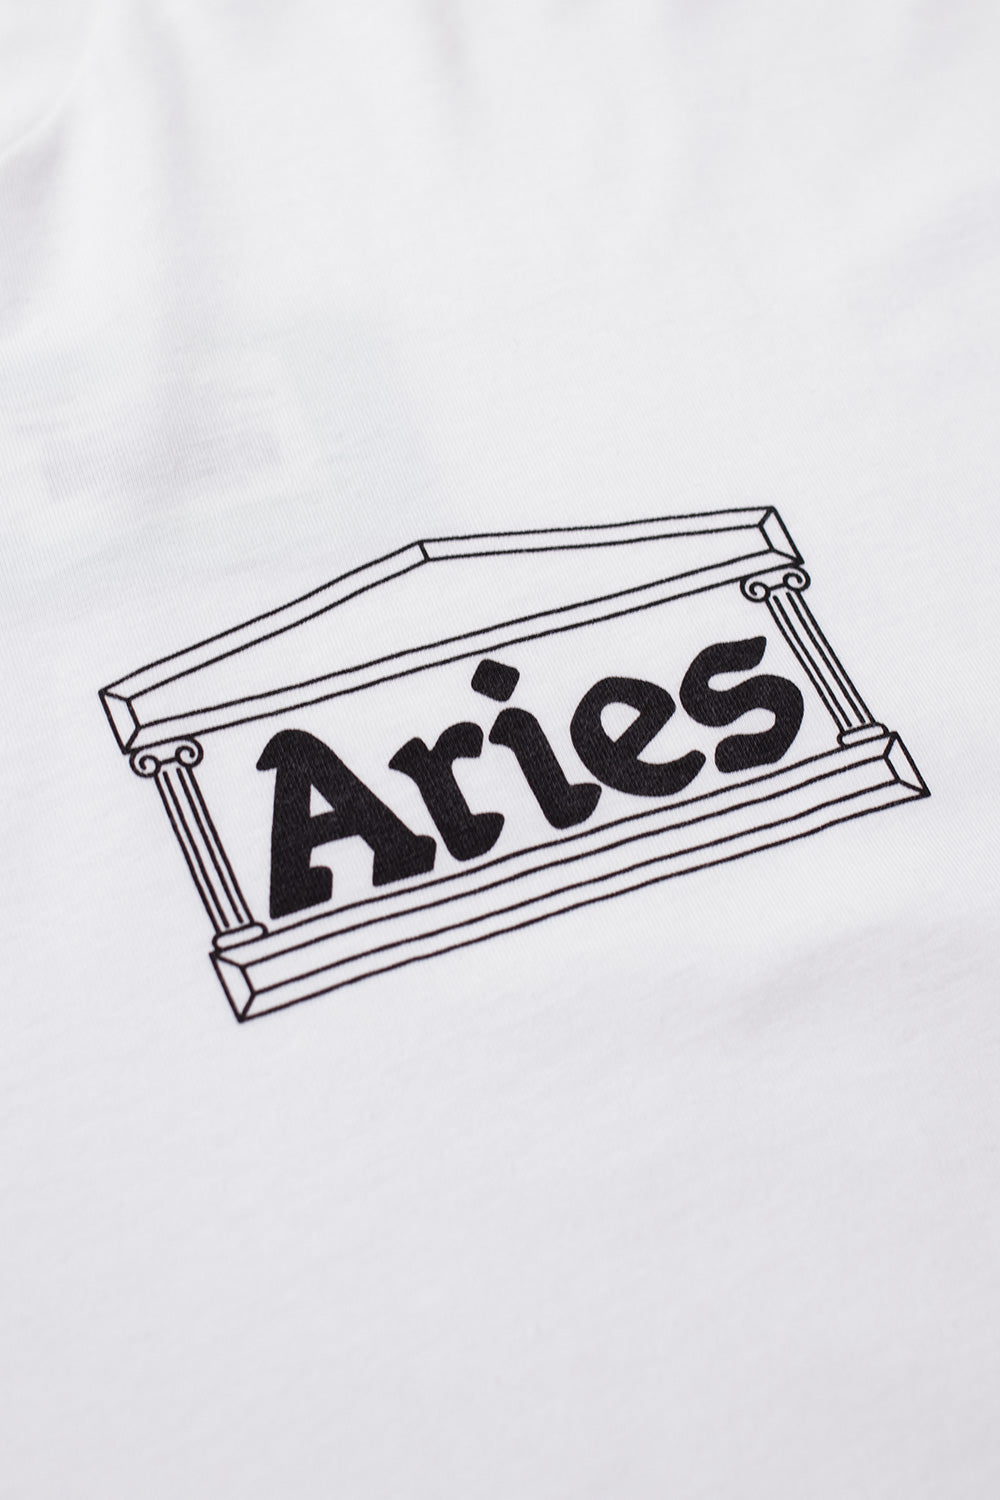 Aries Temple T-Shirt White - BONKERS